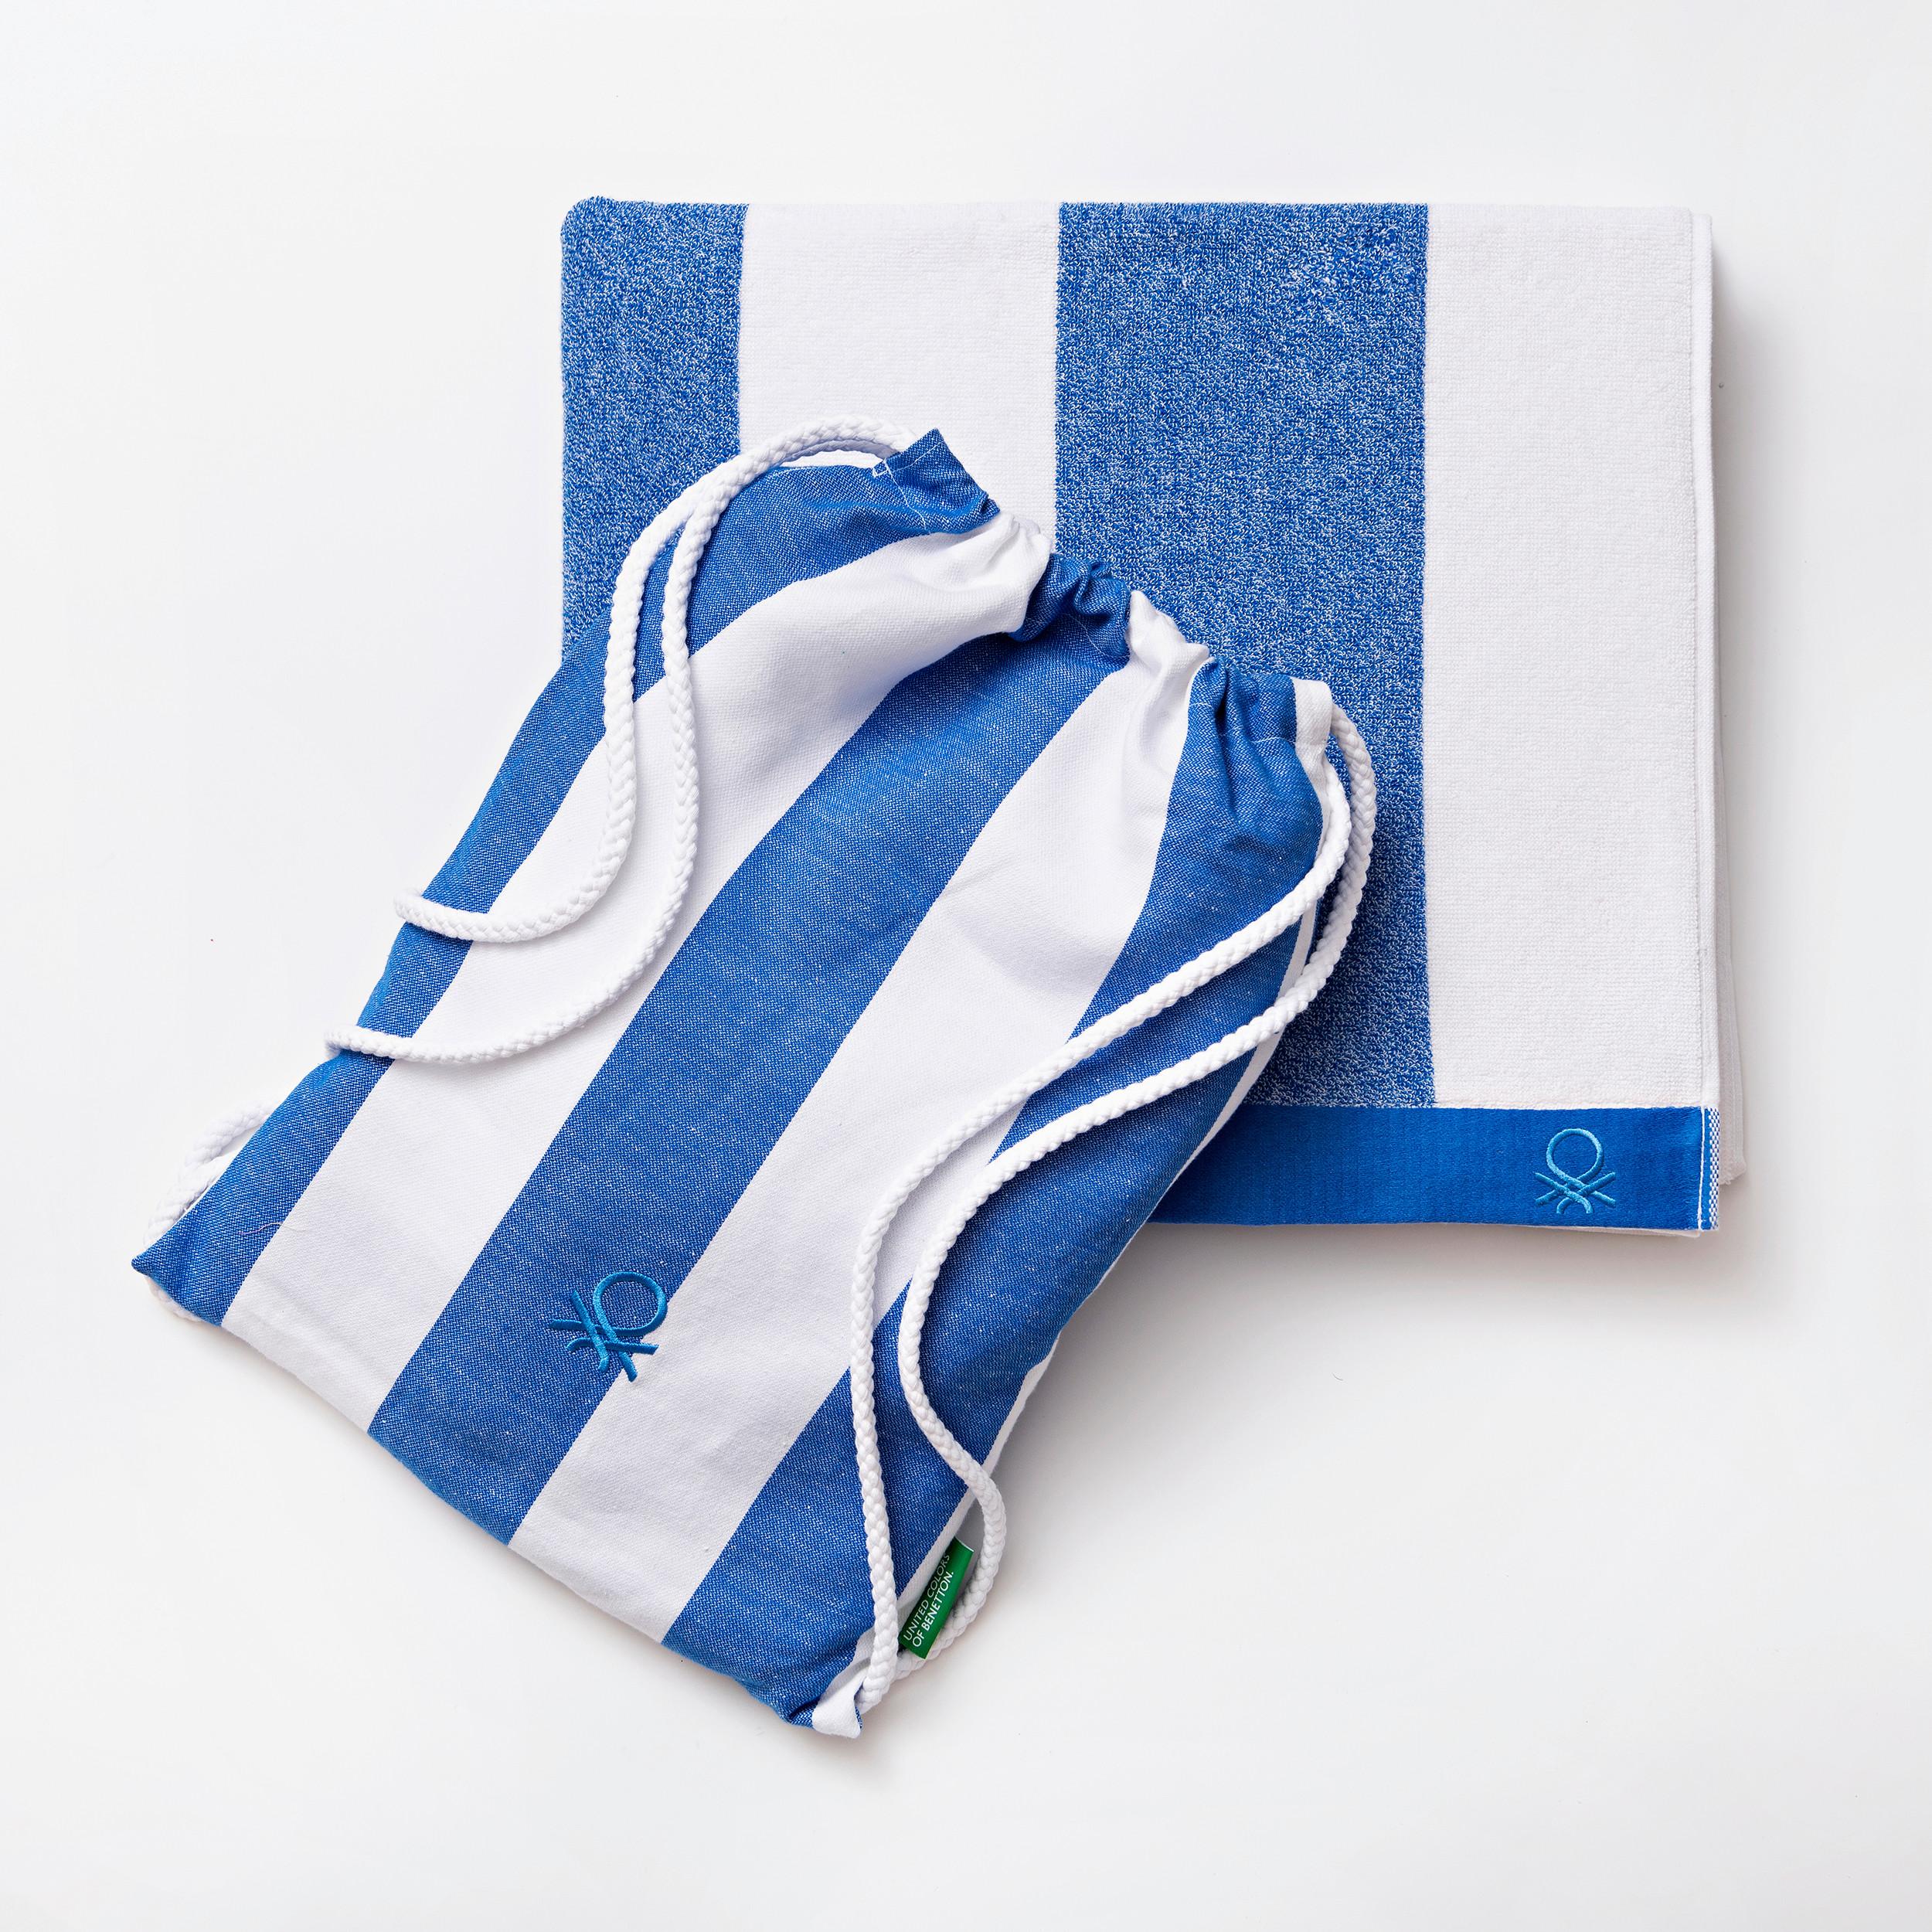 Strandtuch Baumwolle Blau/ Weiss 45x35x4 cm - Blau/Weiß, Basics, Textil (45/35/4cm) - Benetton